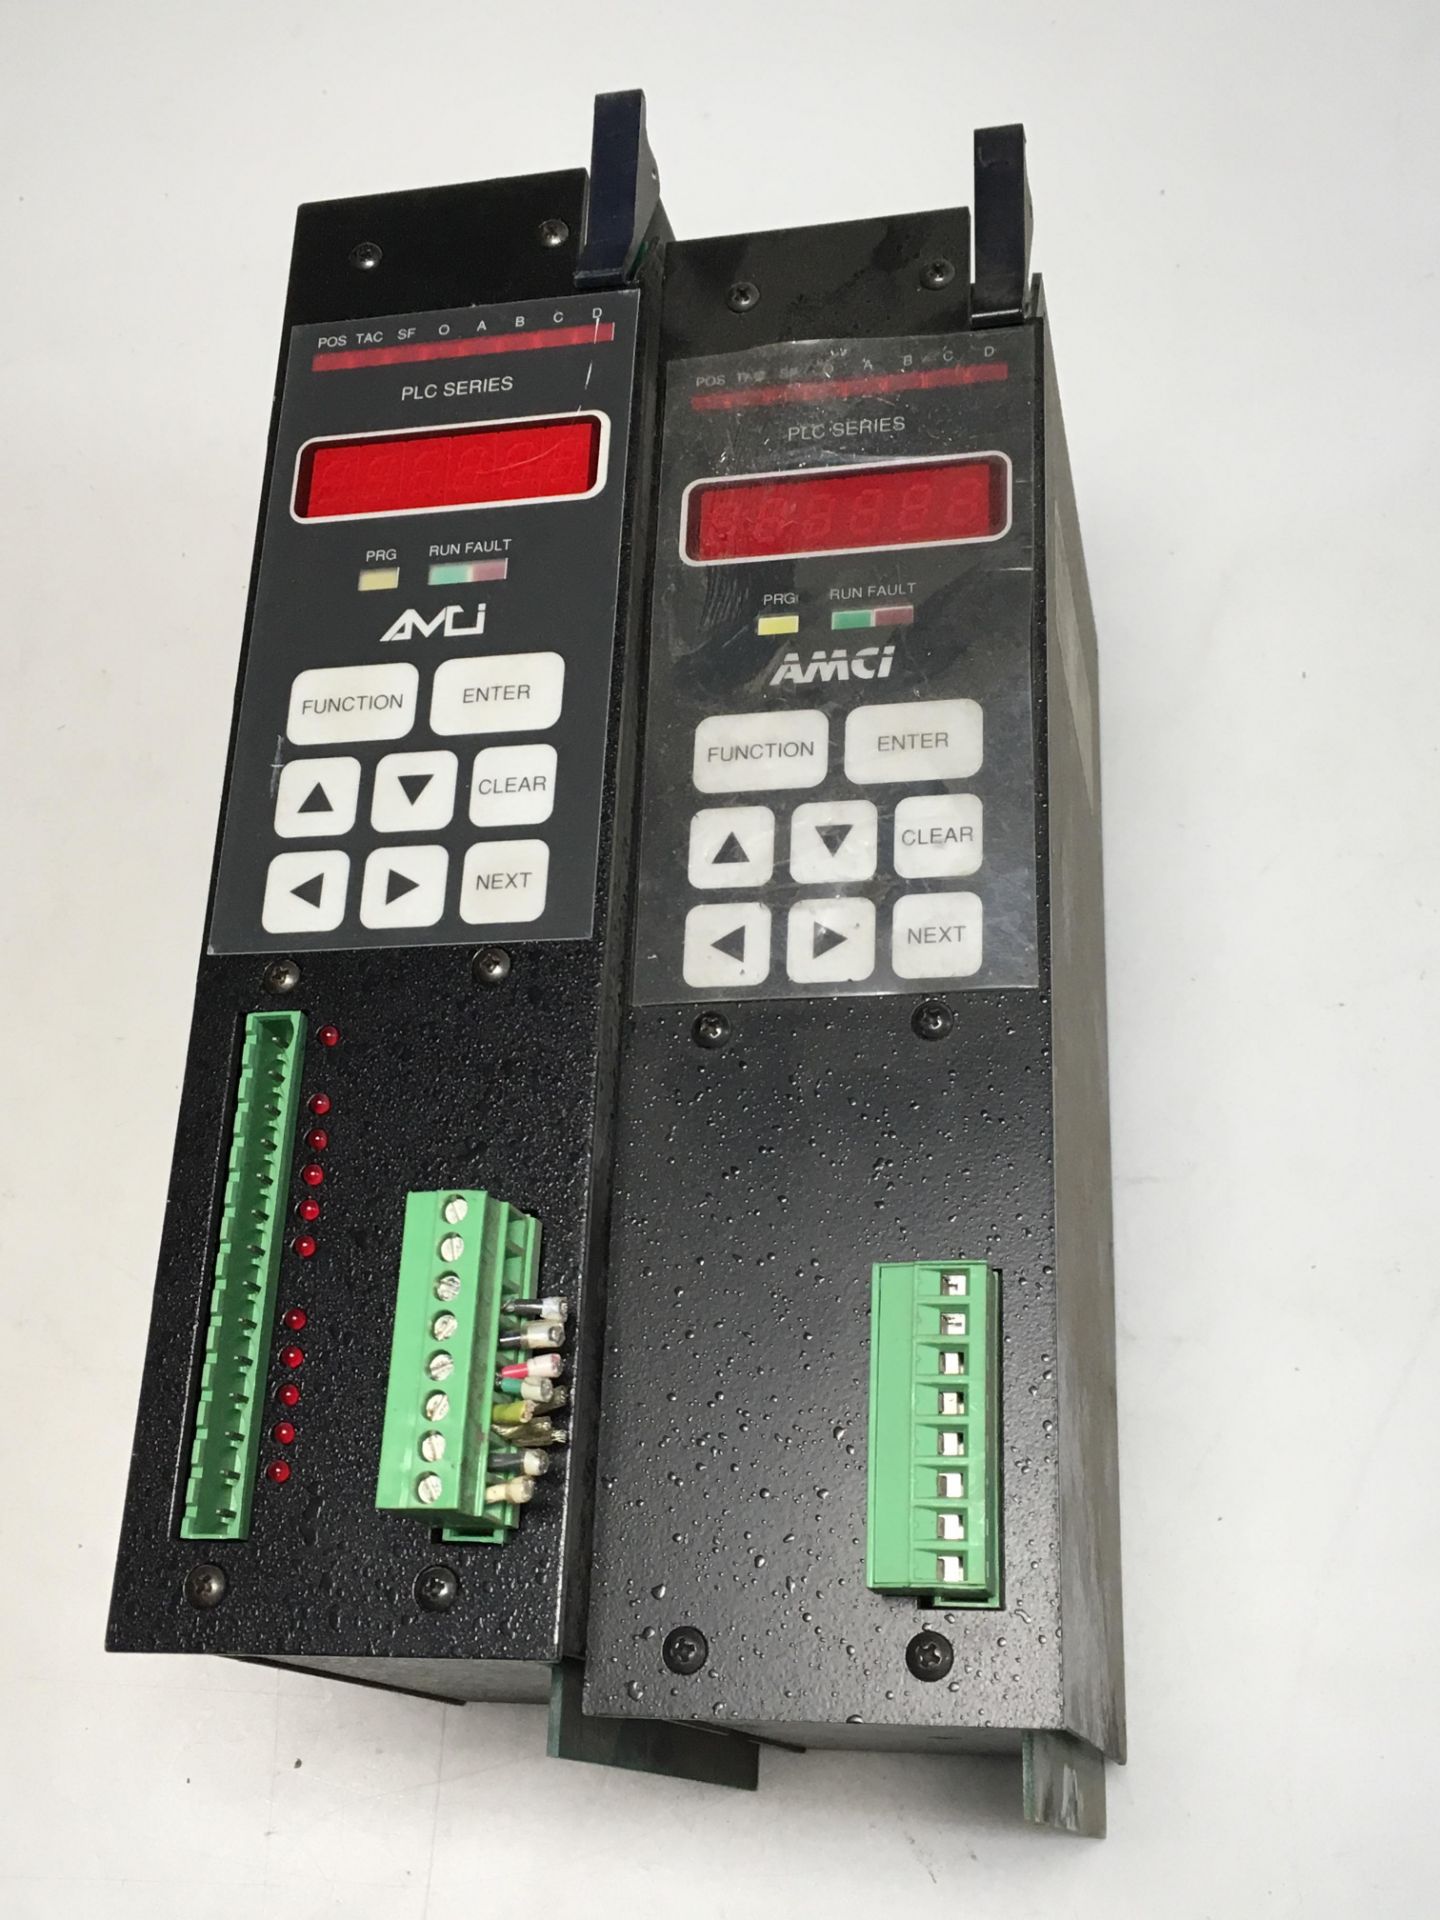 LOT OF AMCI/Allen Bradley 1771 PLC Series Prog Limit Switch Controller Modules - Image 2 of 2